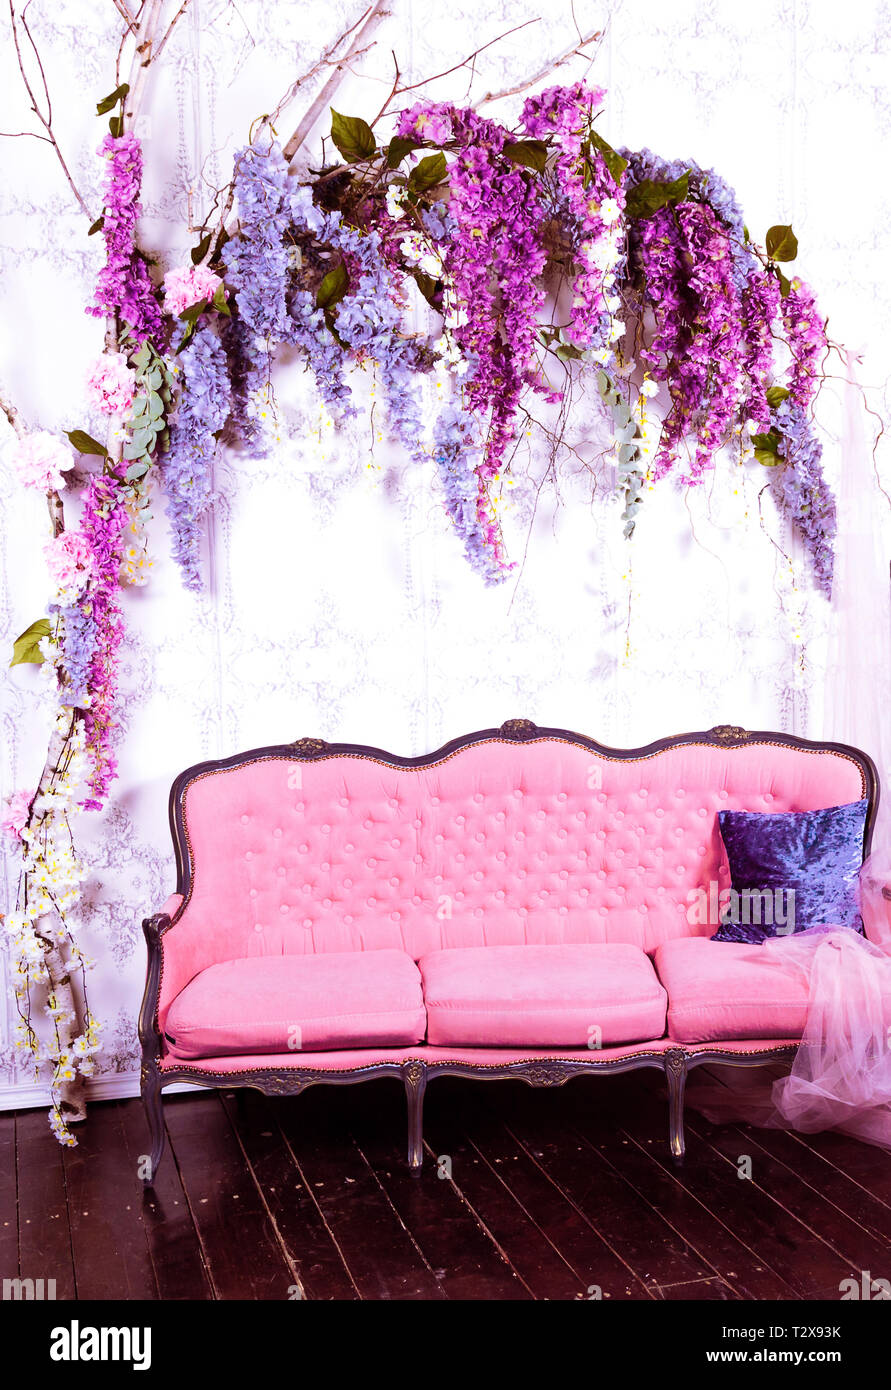 Sofa, pattern, wood, purple, beautiful Couch, lila Kissen Alamy Stock - colorful window kolonial Photo Sessel Muster Holz pillow